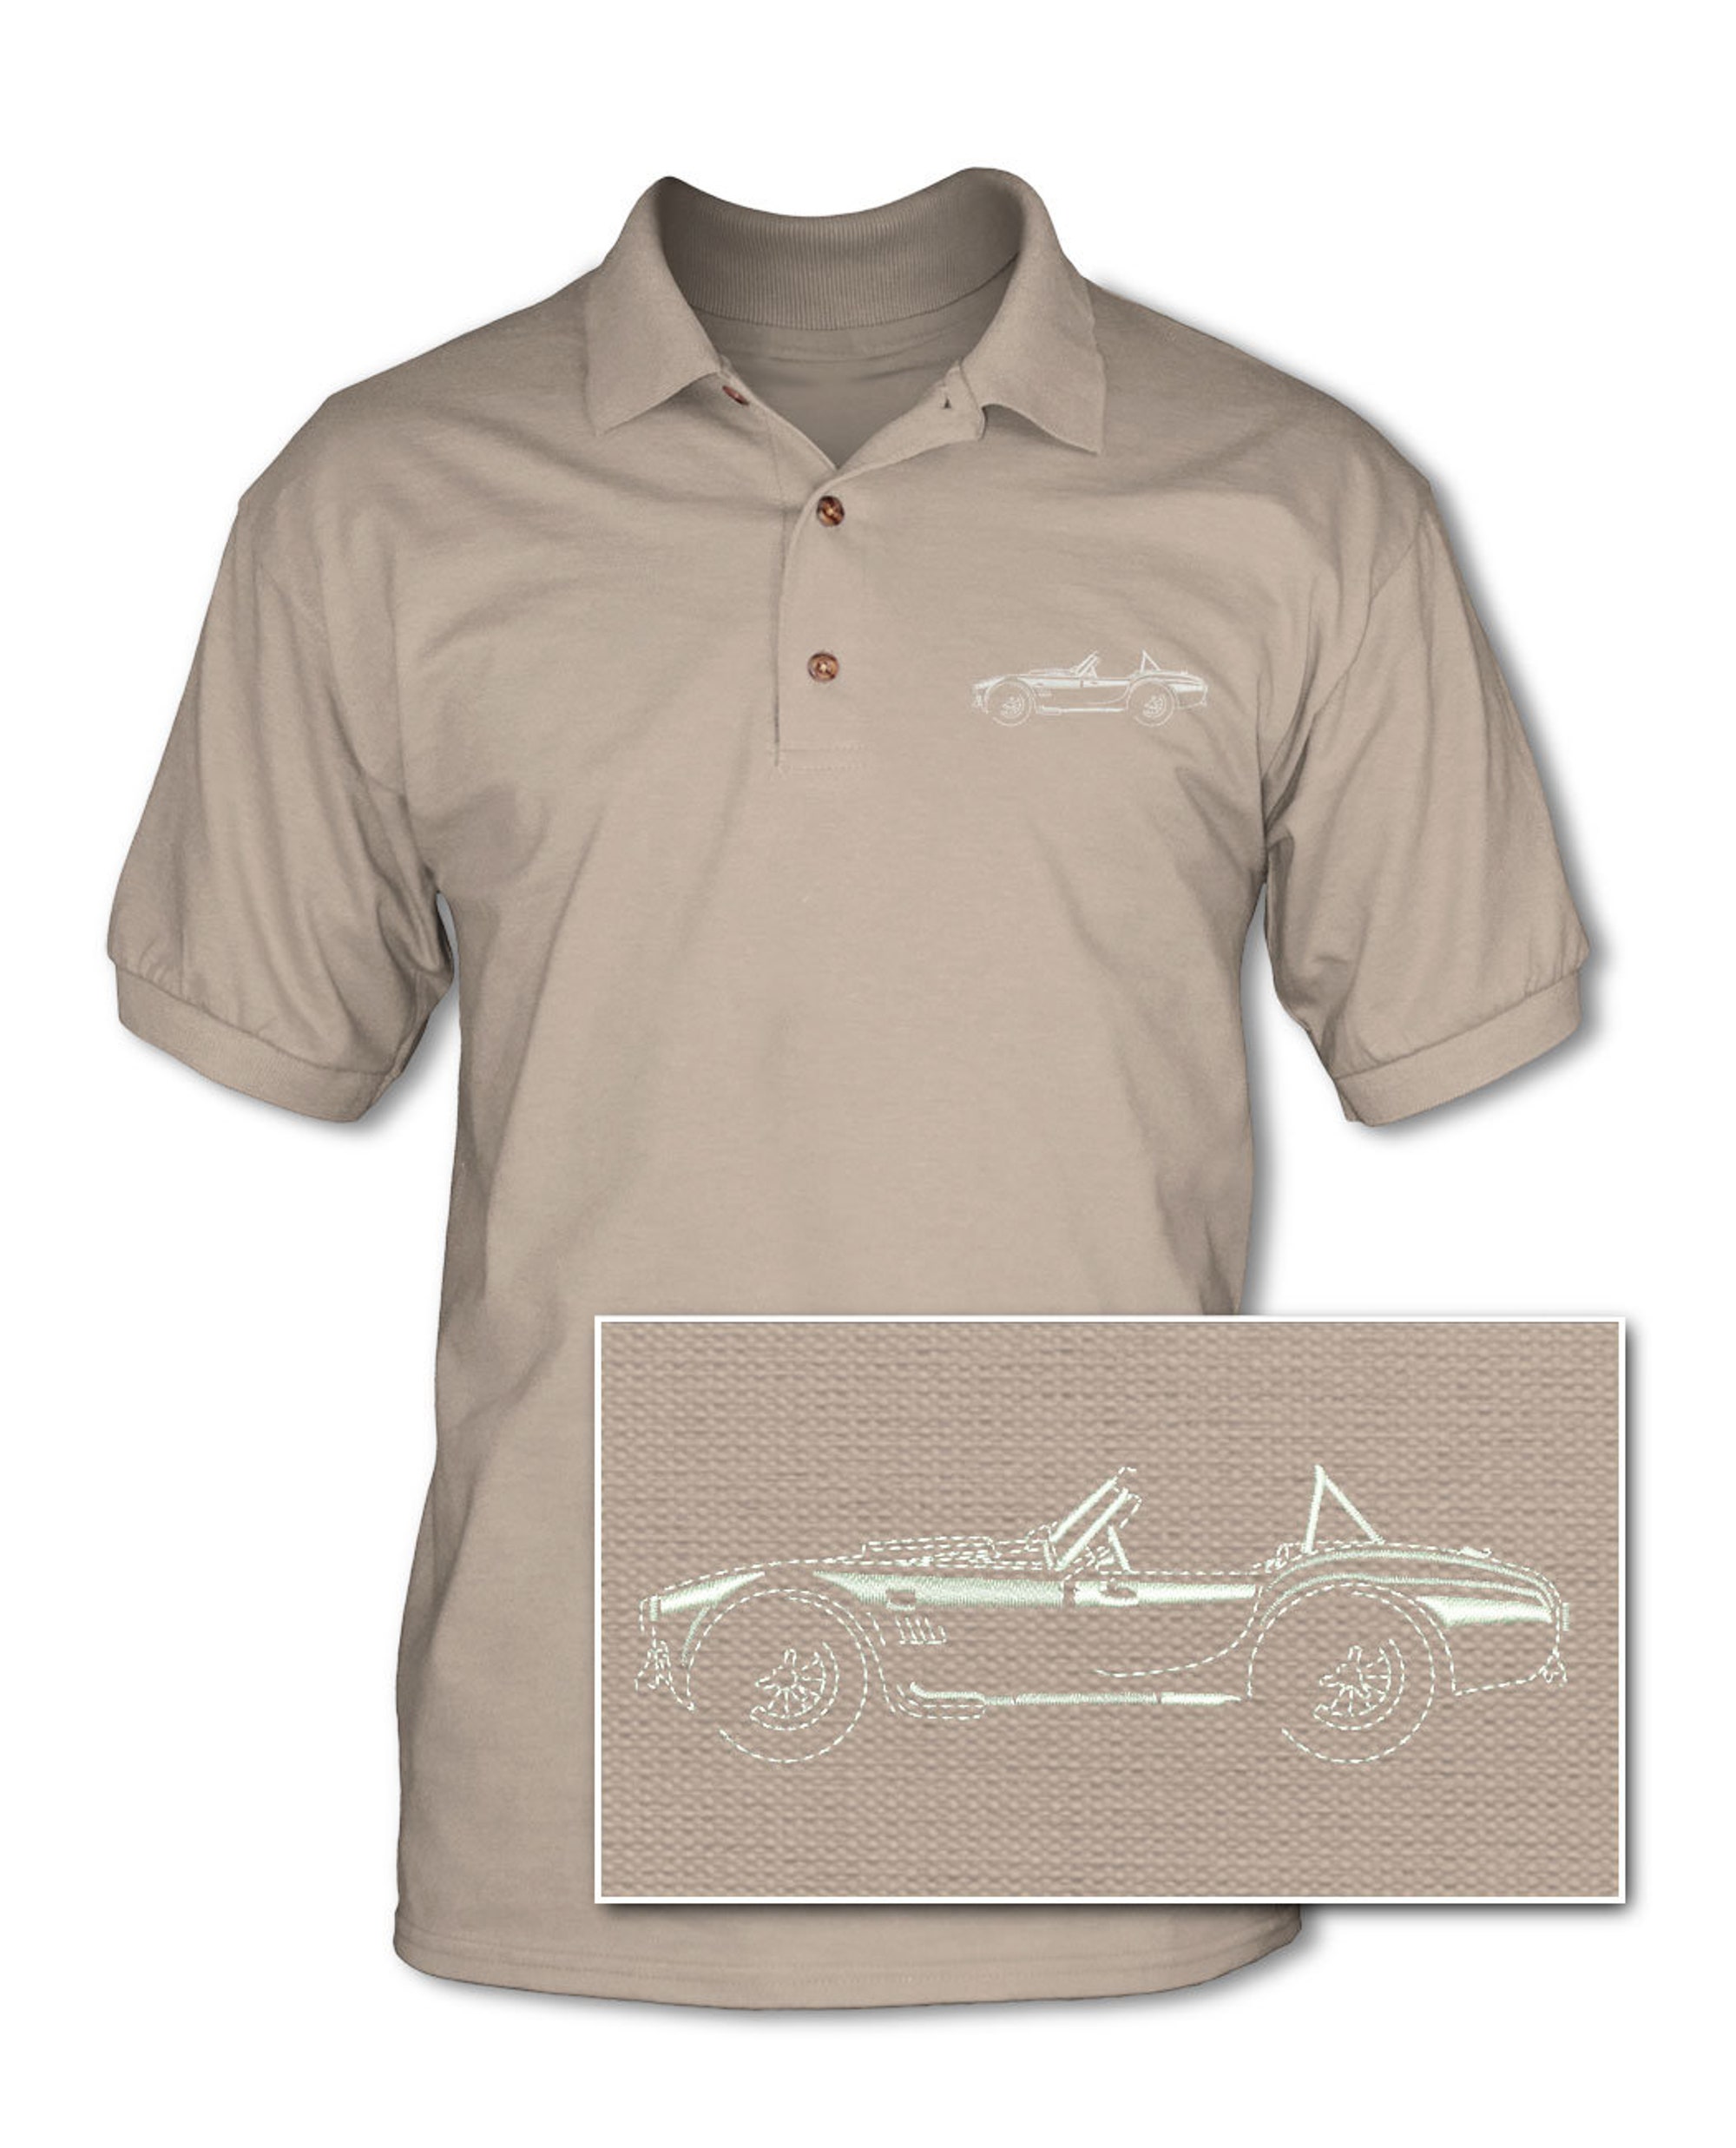 Discover 1965 AC Shelby Cobra 427 SC Side View Adult Pique Polo Shirt - American Classic Car